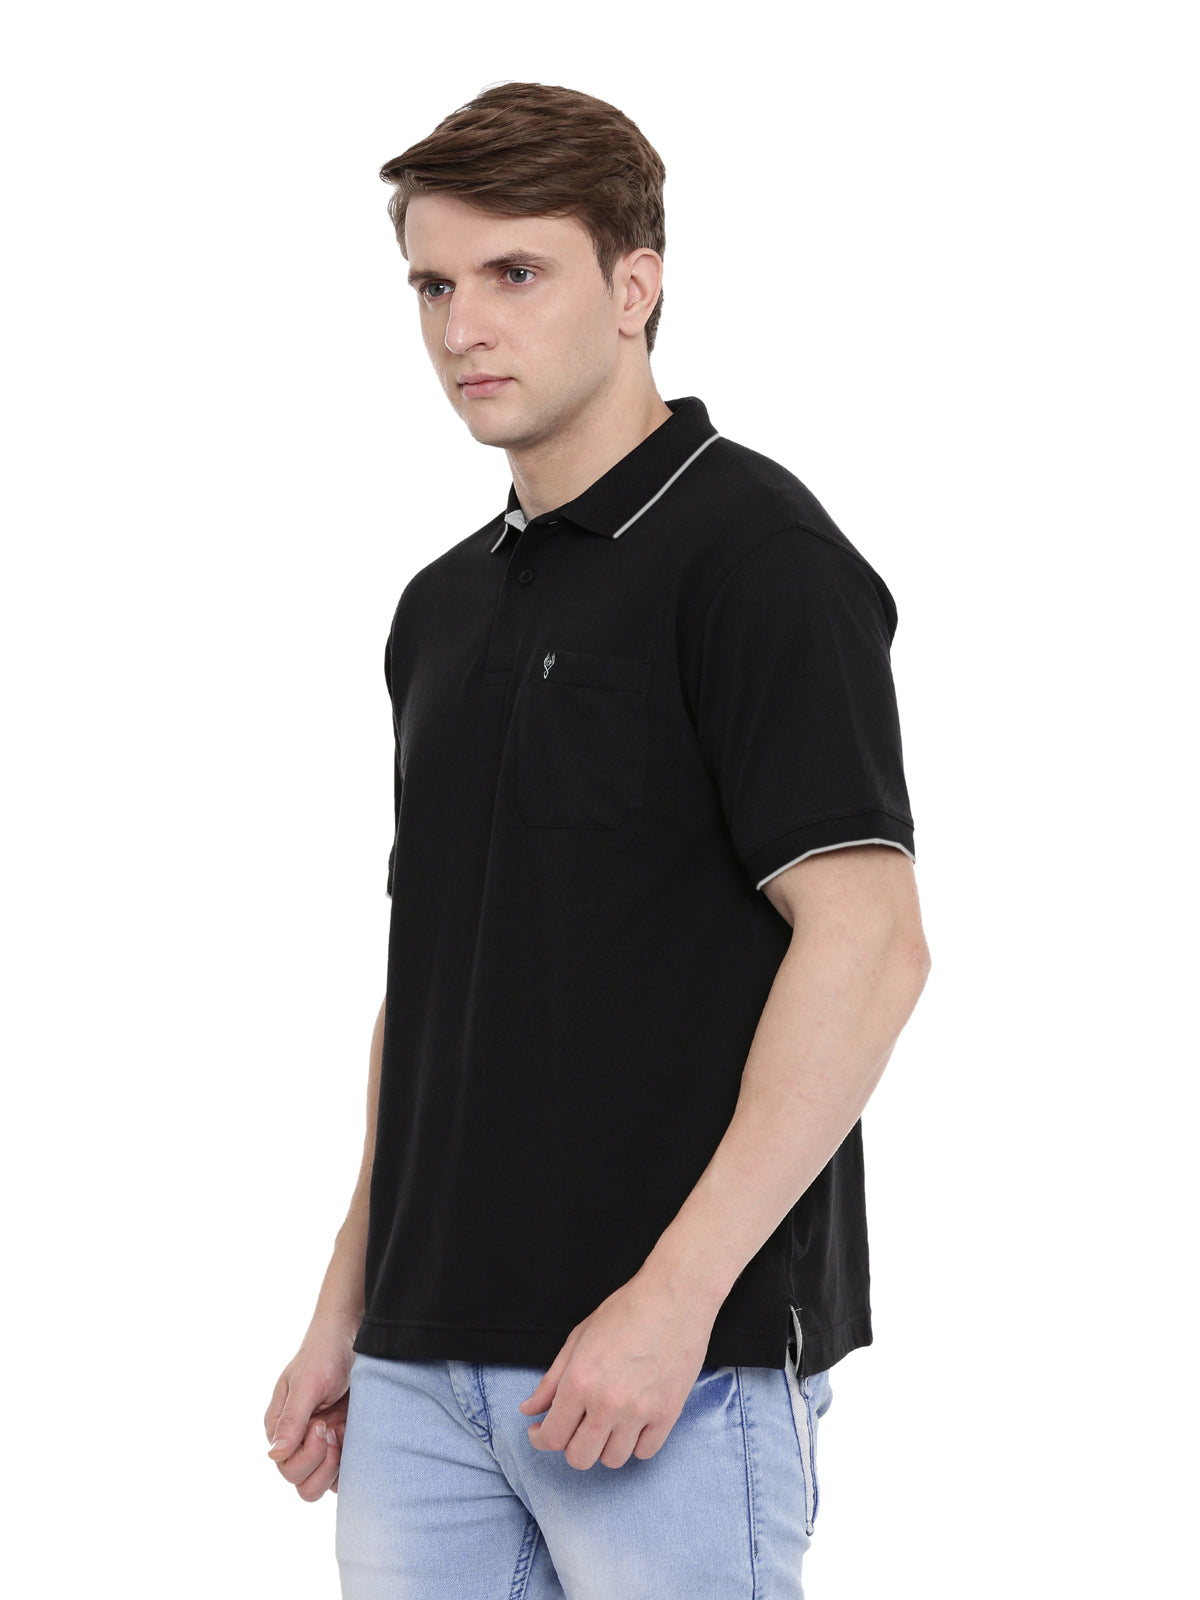 Bulk Black The Authentic T-Shirt Company Short Sleeve T-Shirts 